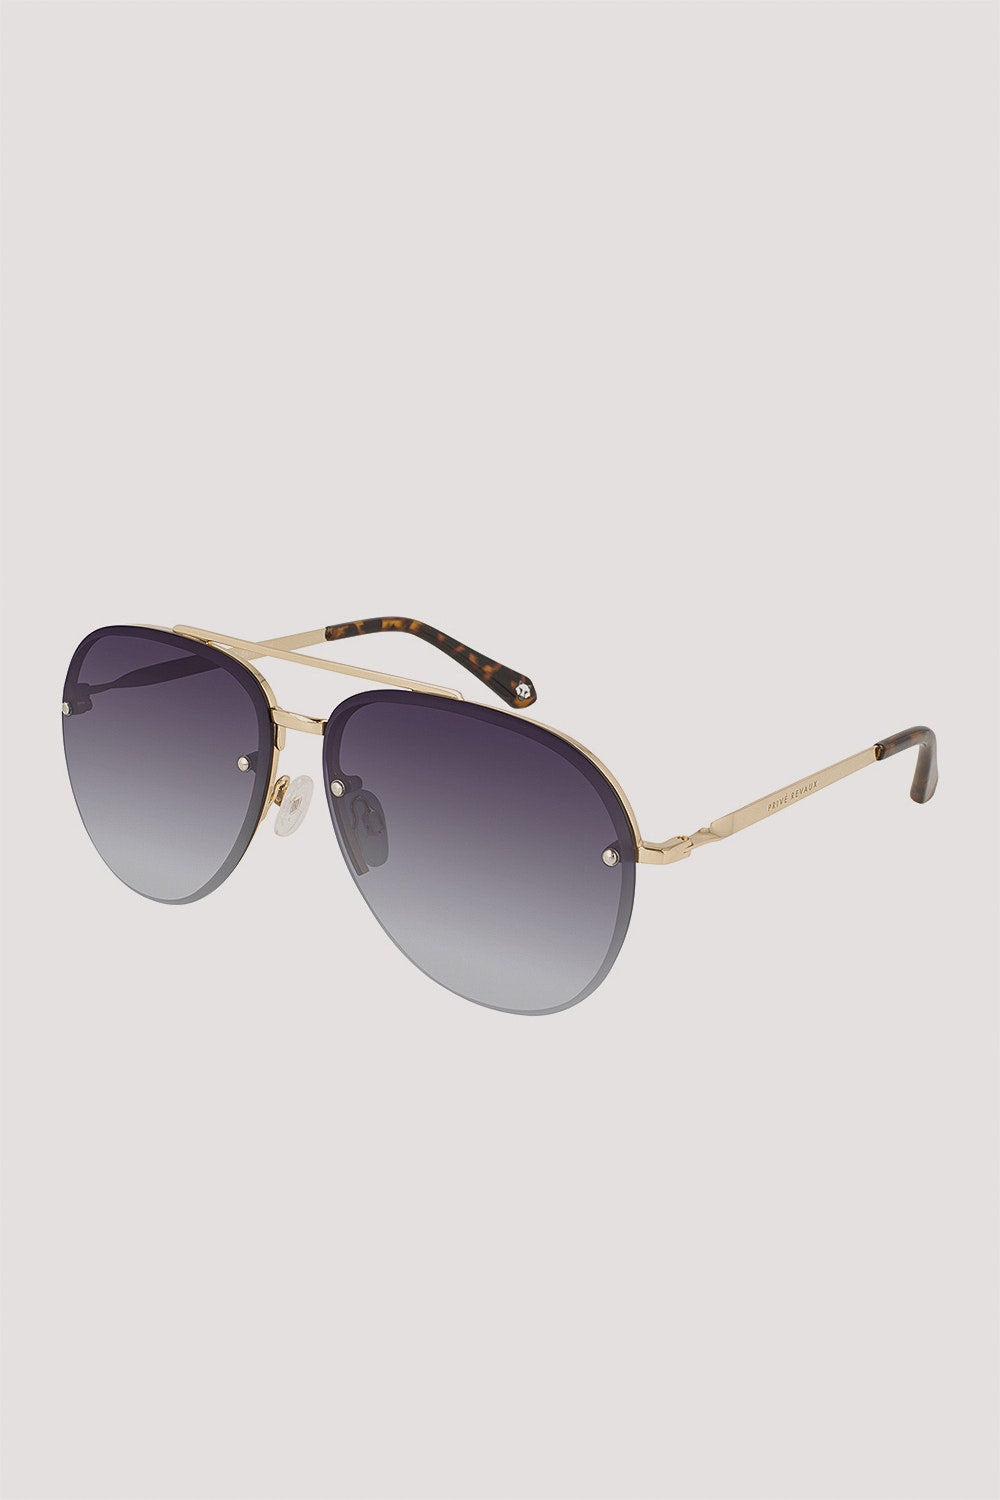 Privé Revaux The Glide Sunglasses - Champagne Gold / Grey